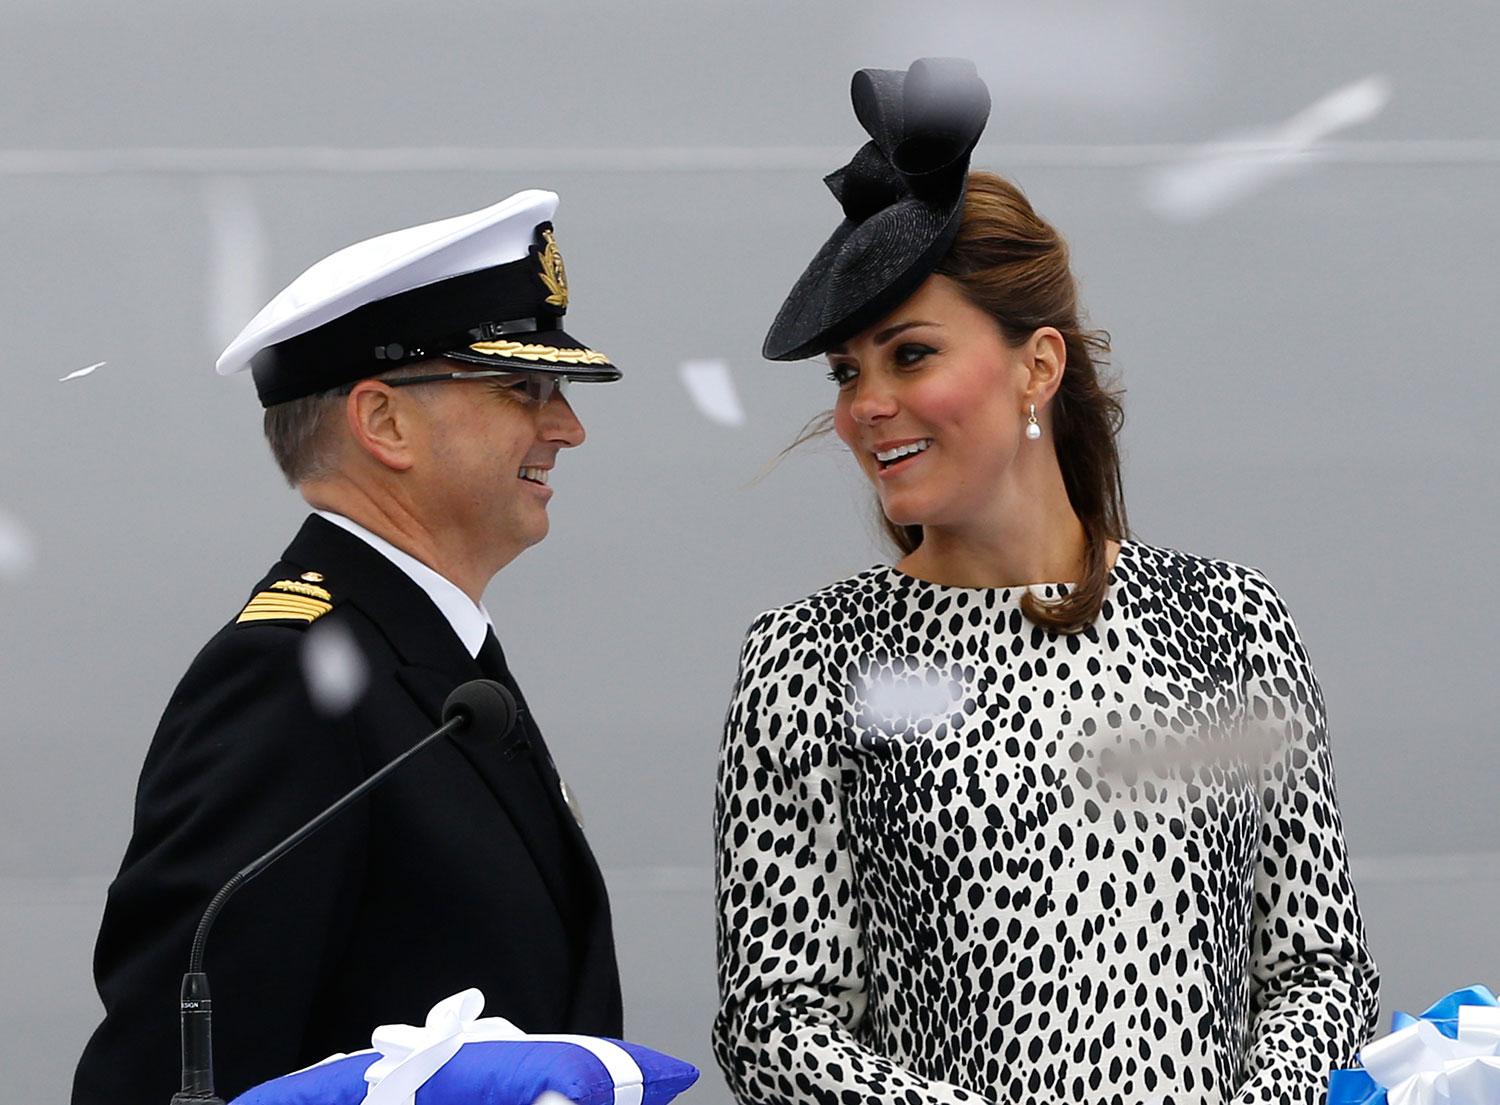 Kate Middleton i samspråk med fartygets kapten Tony Draper under dopceremonin i Southampton den 13 juni.